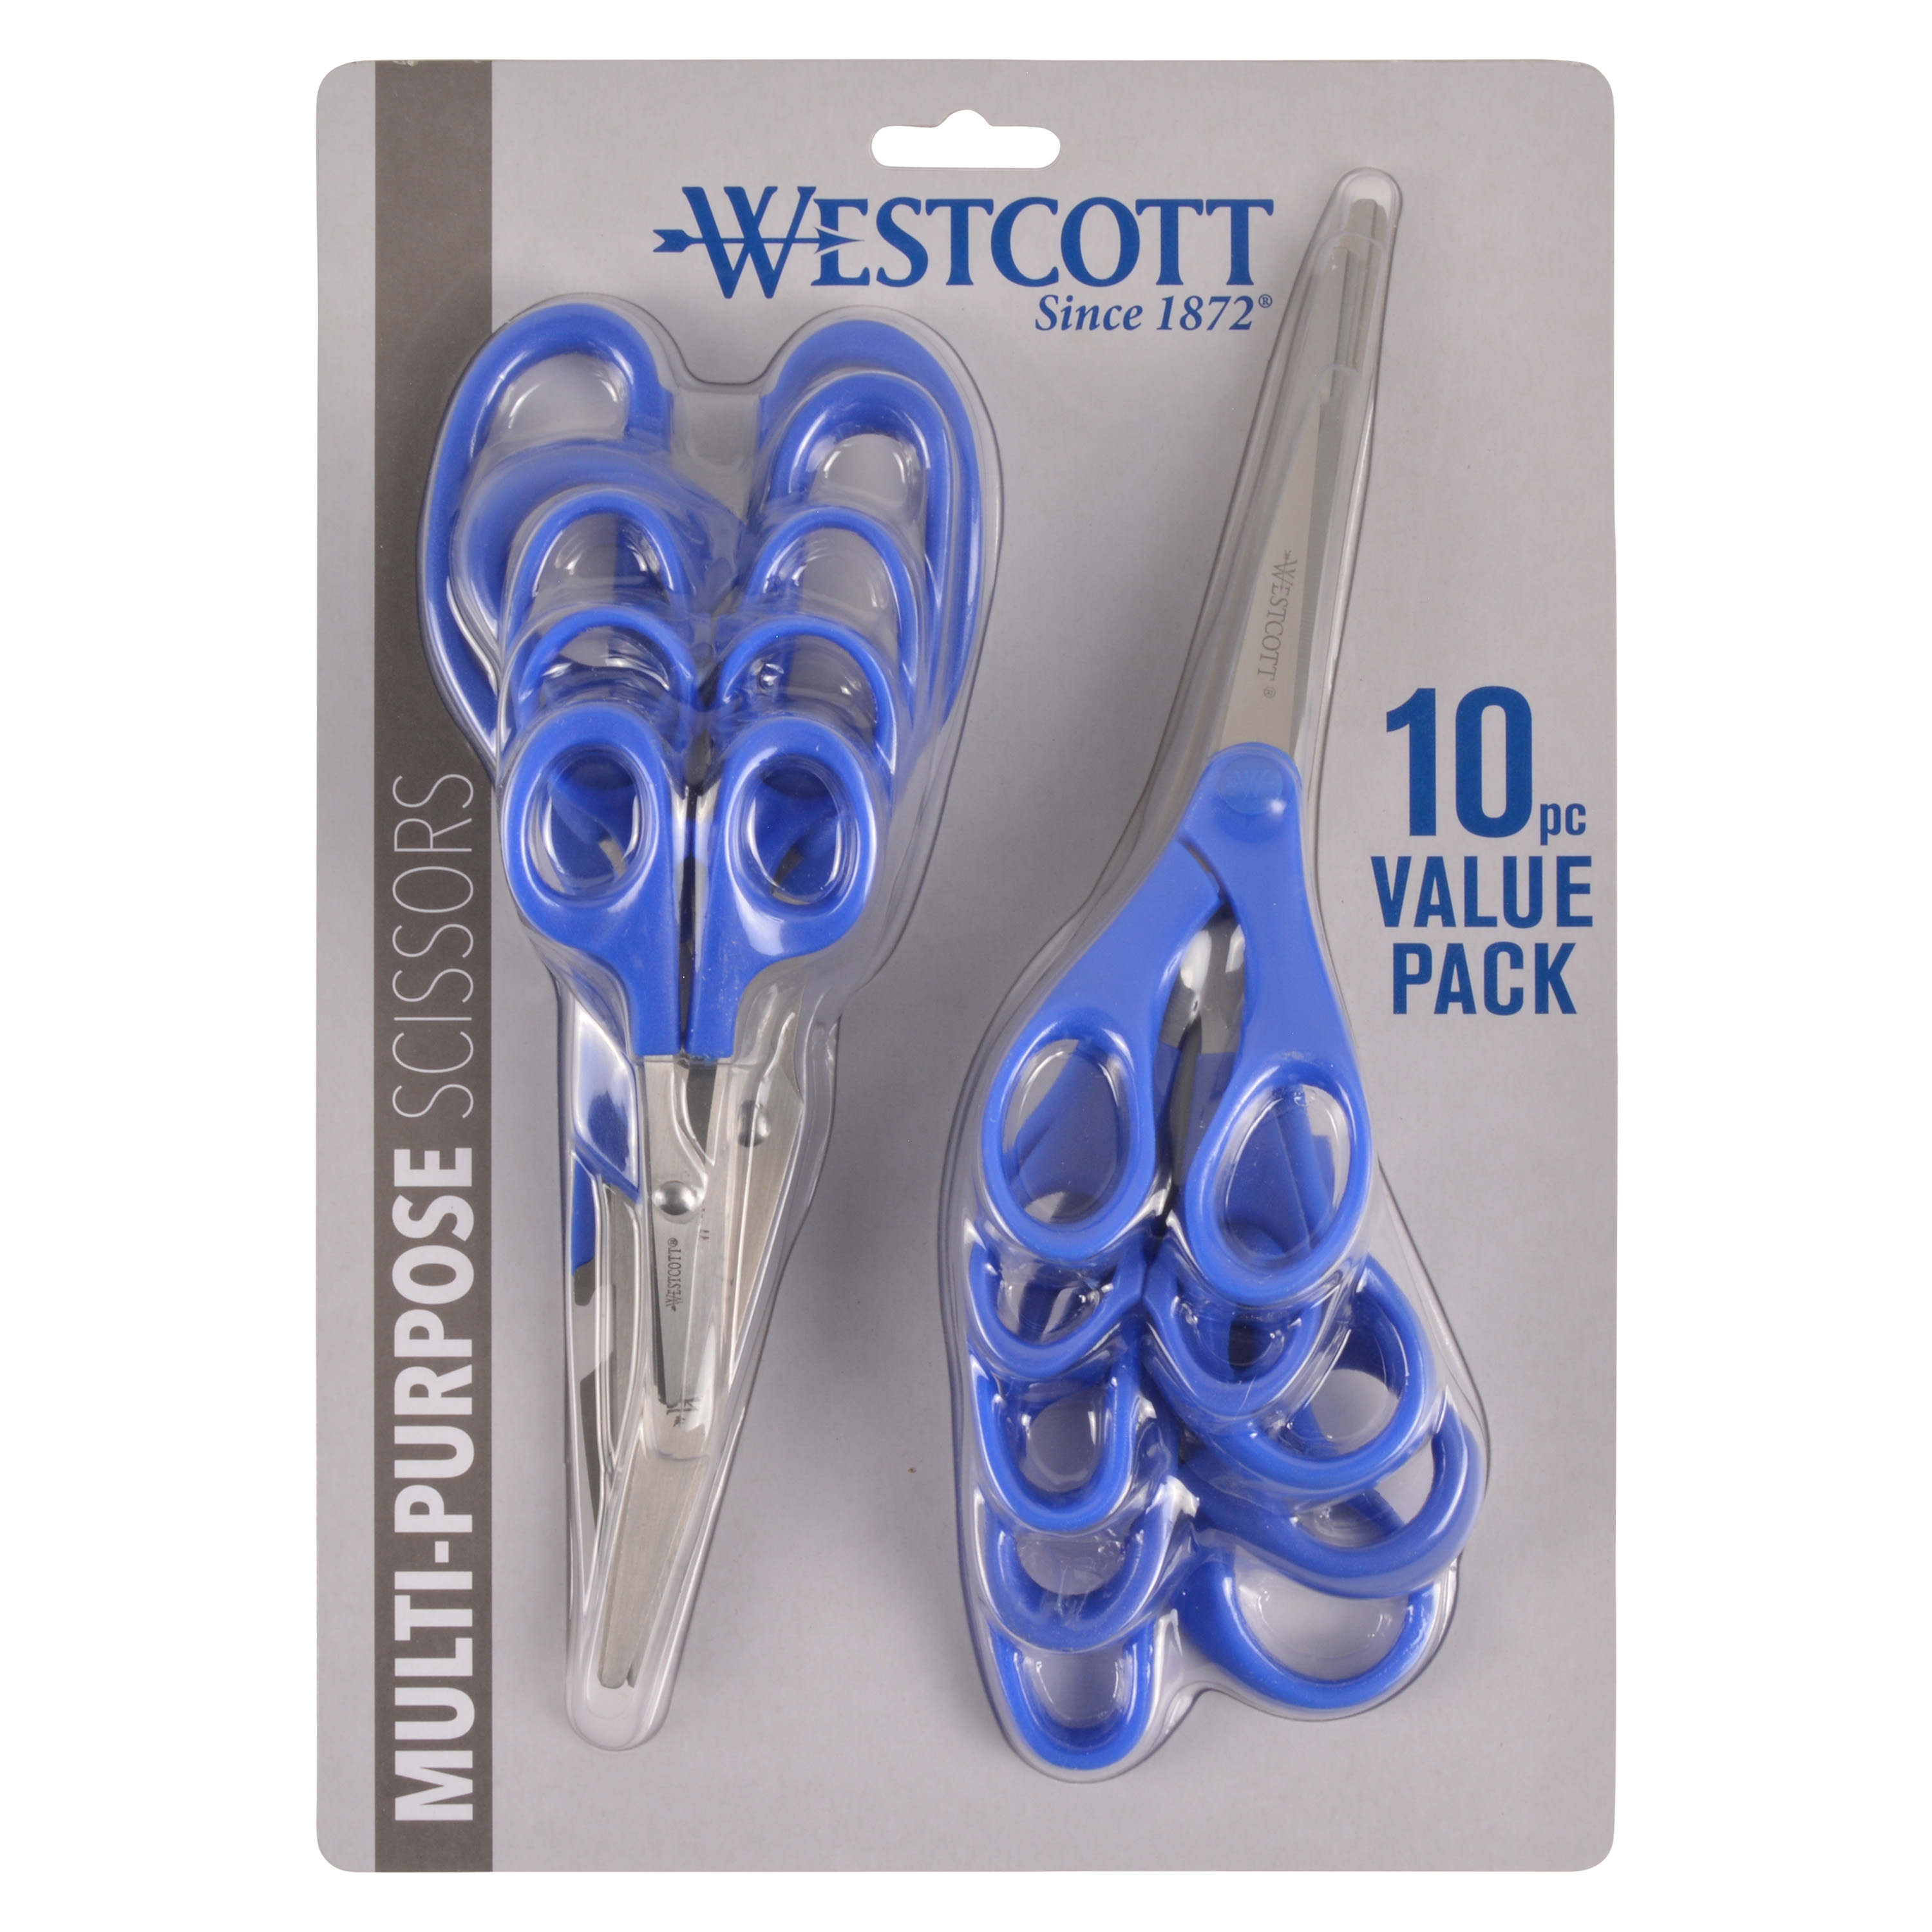 Westcott 10 piece Multi-Purpose Value Pack Sewing Scissors (17021)